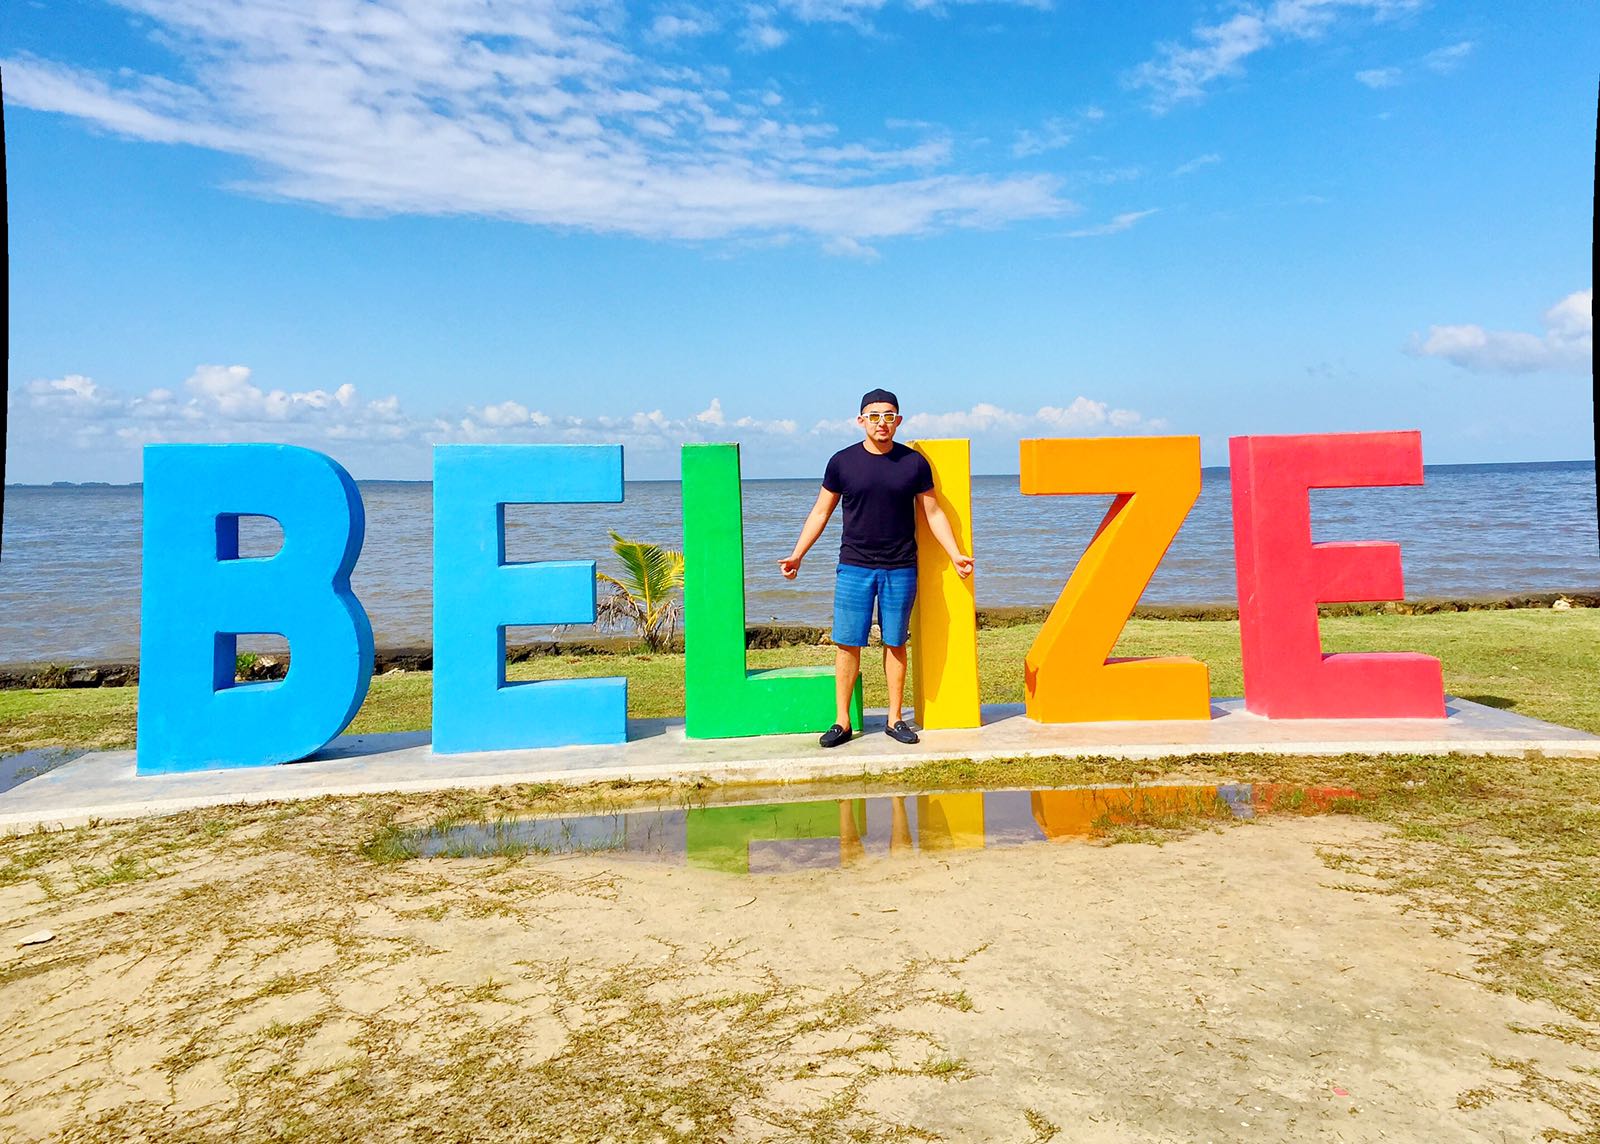 Simon spending peoples money in Belize